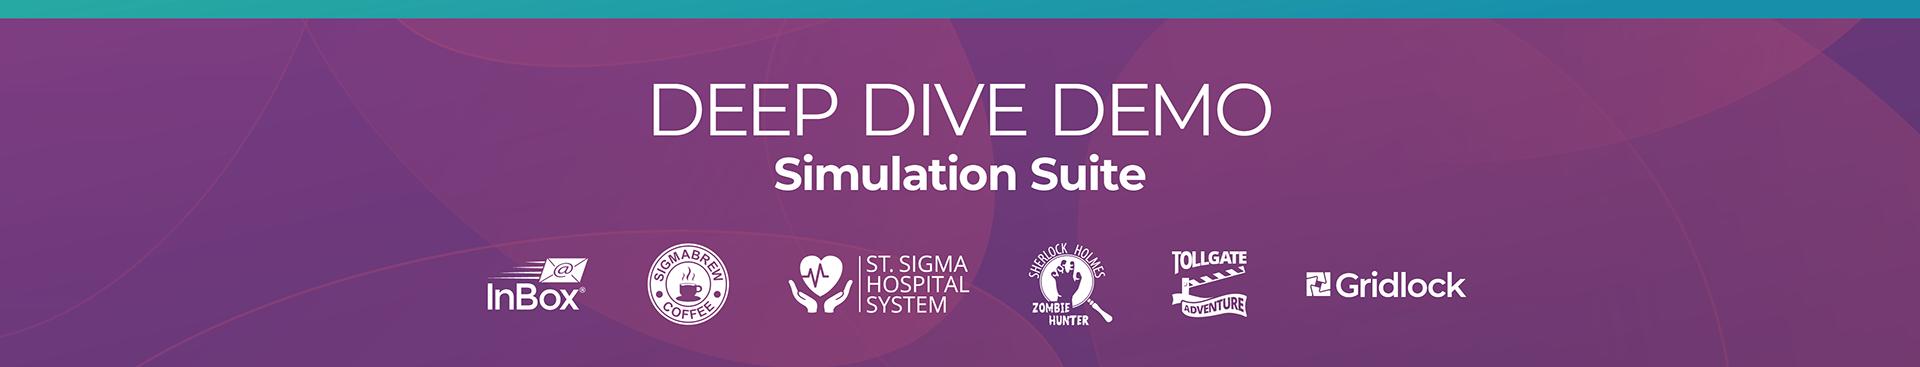 Simulation Demonstration Request: Deep Dive Demo